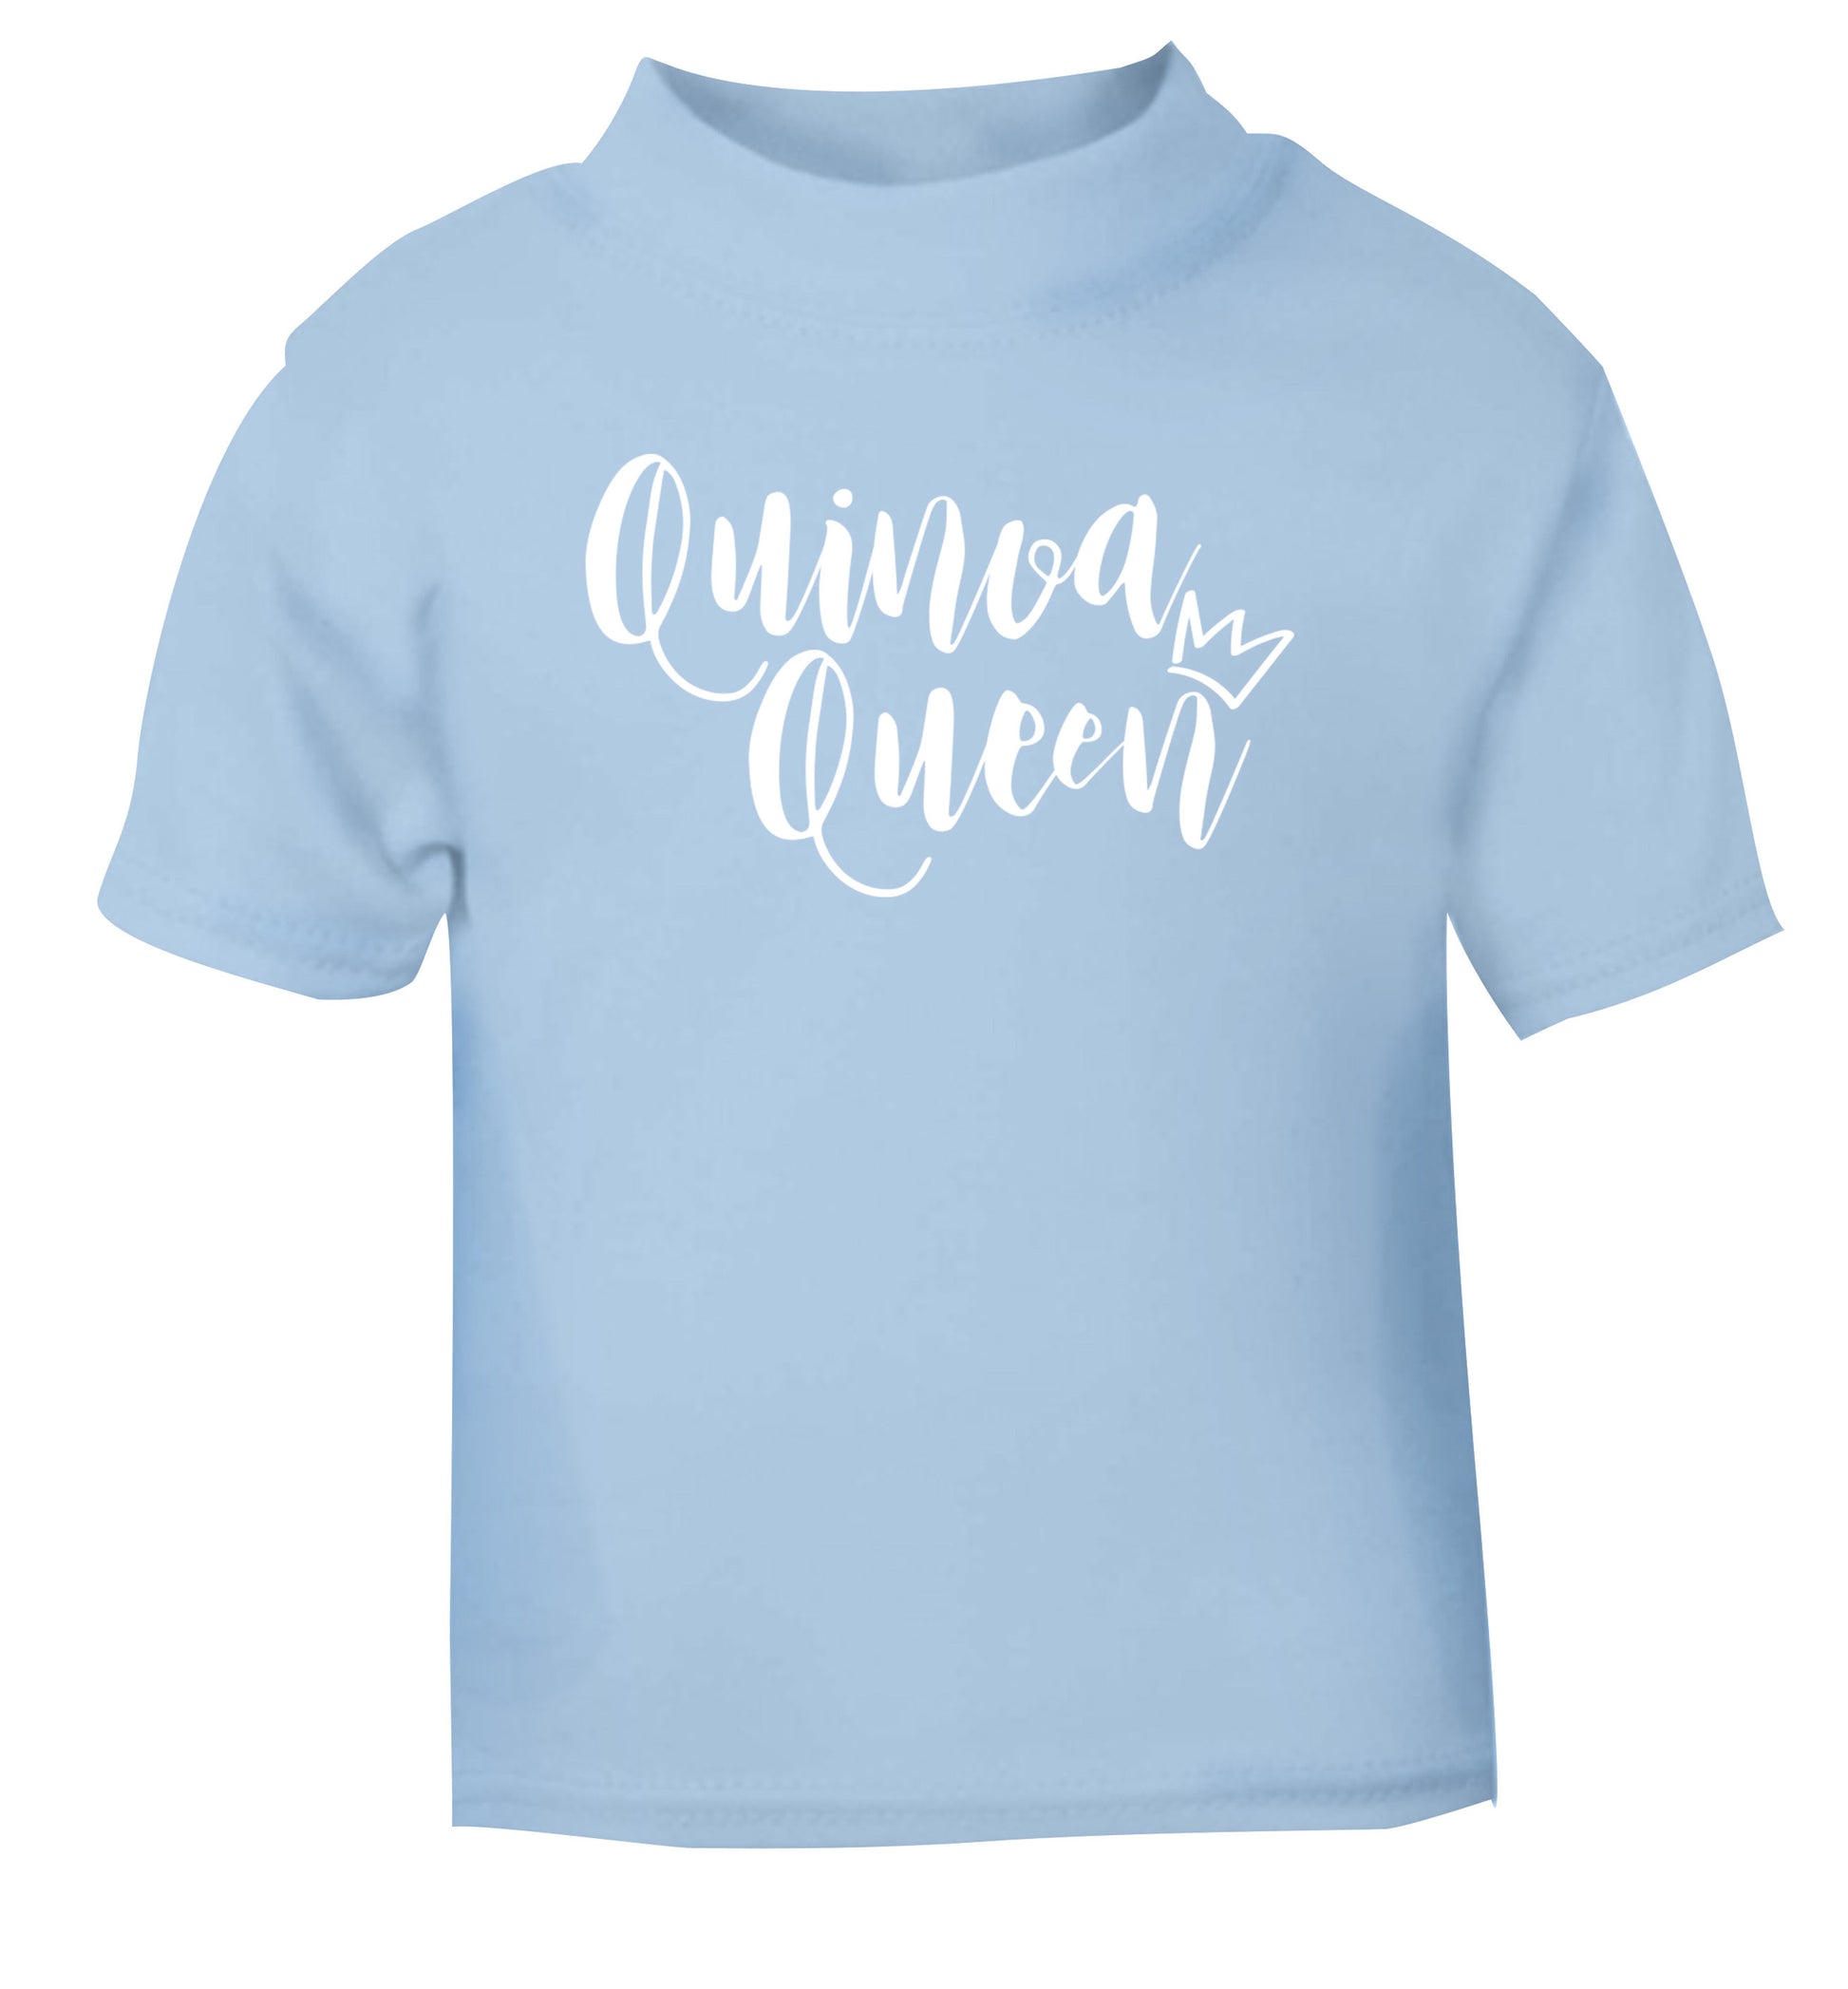 Quinoa Queen light blue Baby Toddler Tshirt 2 Years